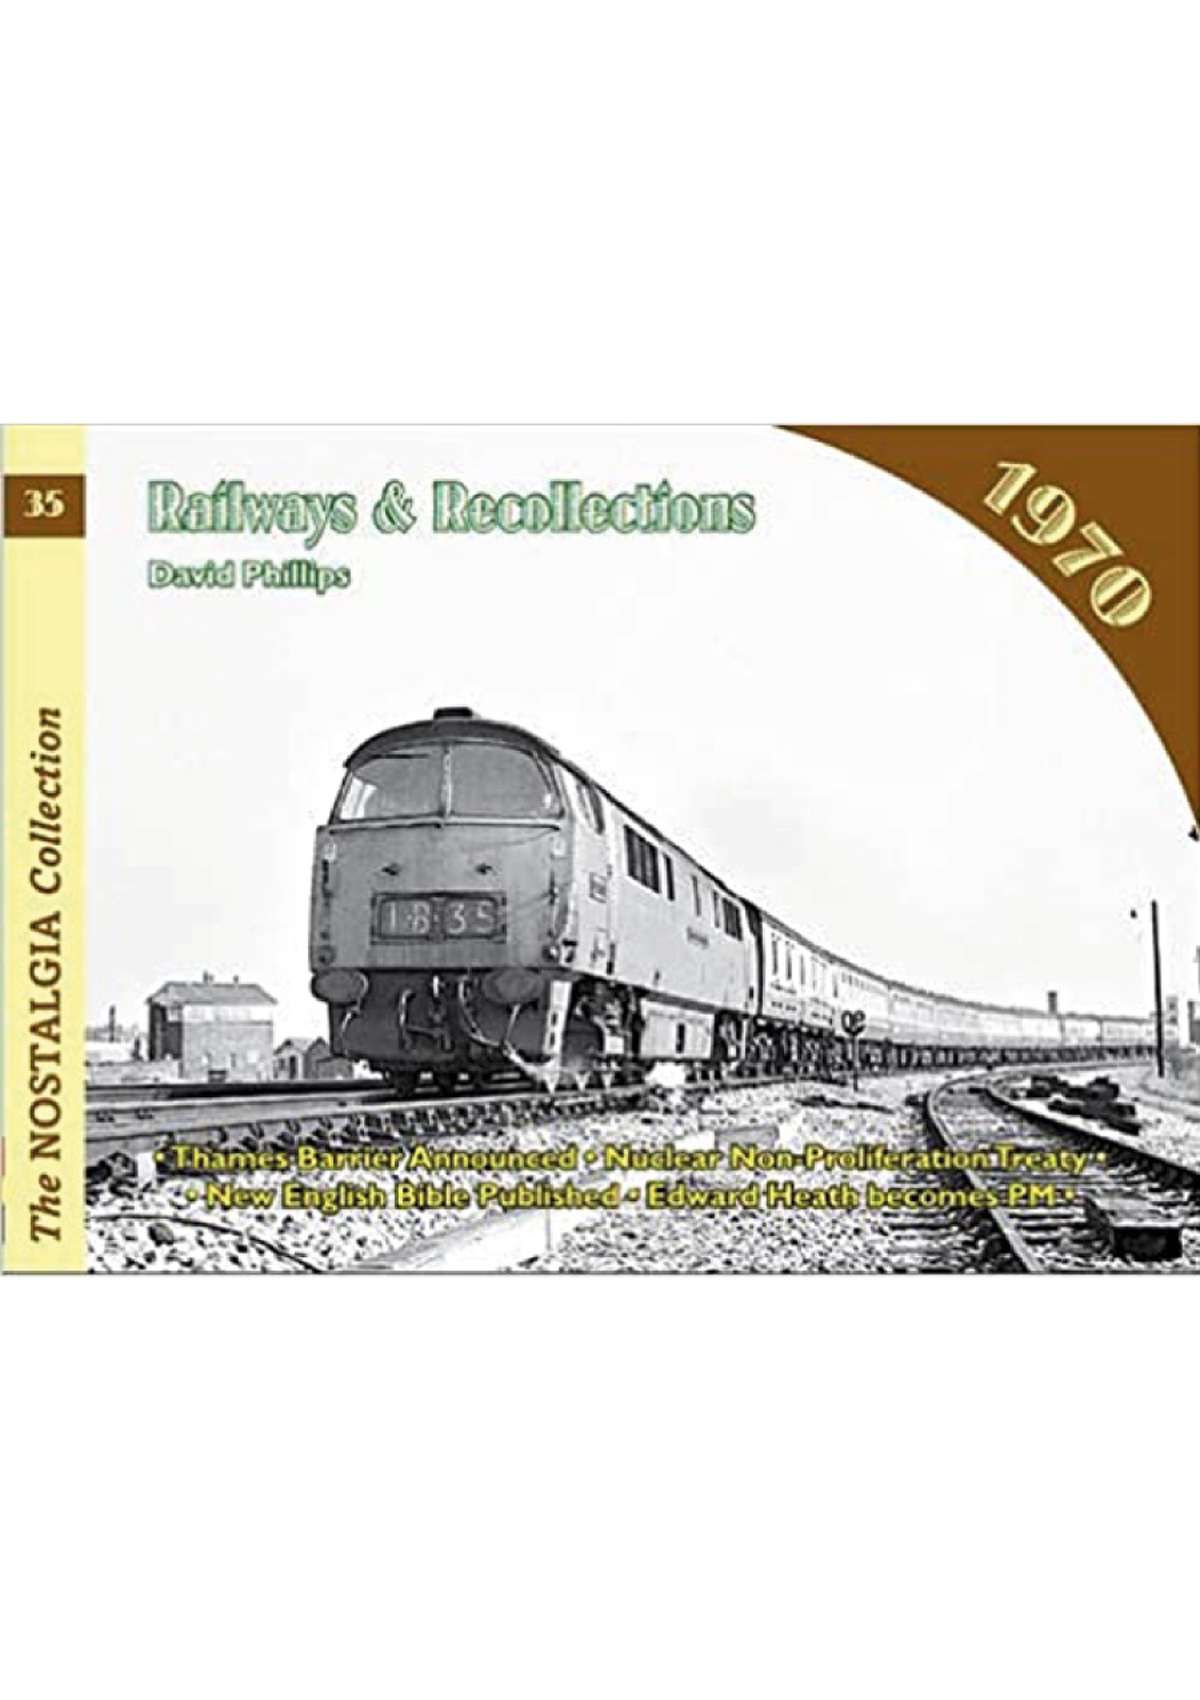 4020 - Vol 35: Railways & Recollections 1970